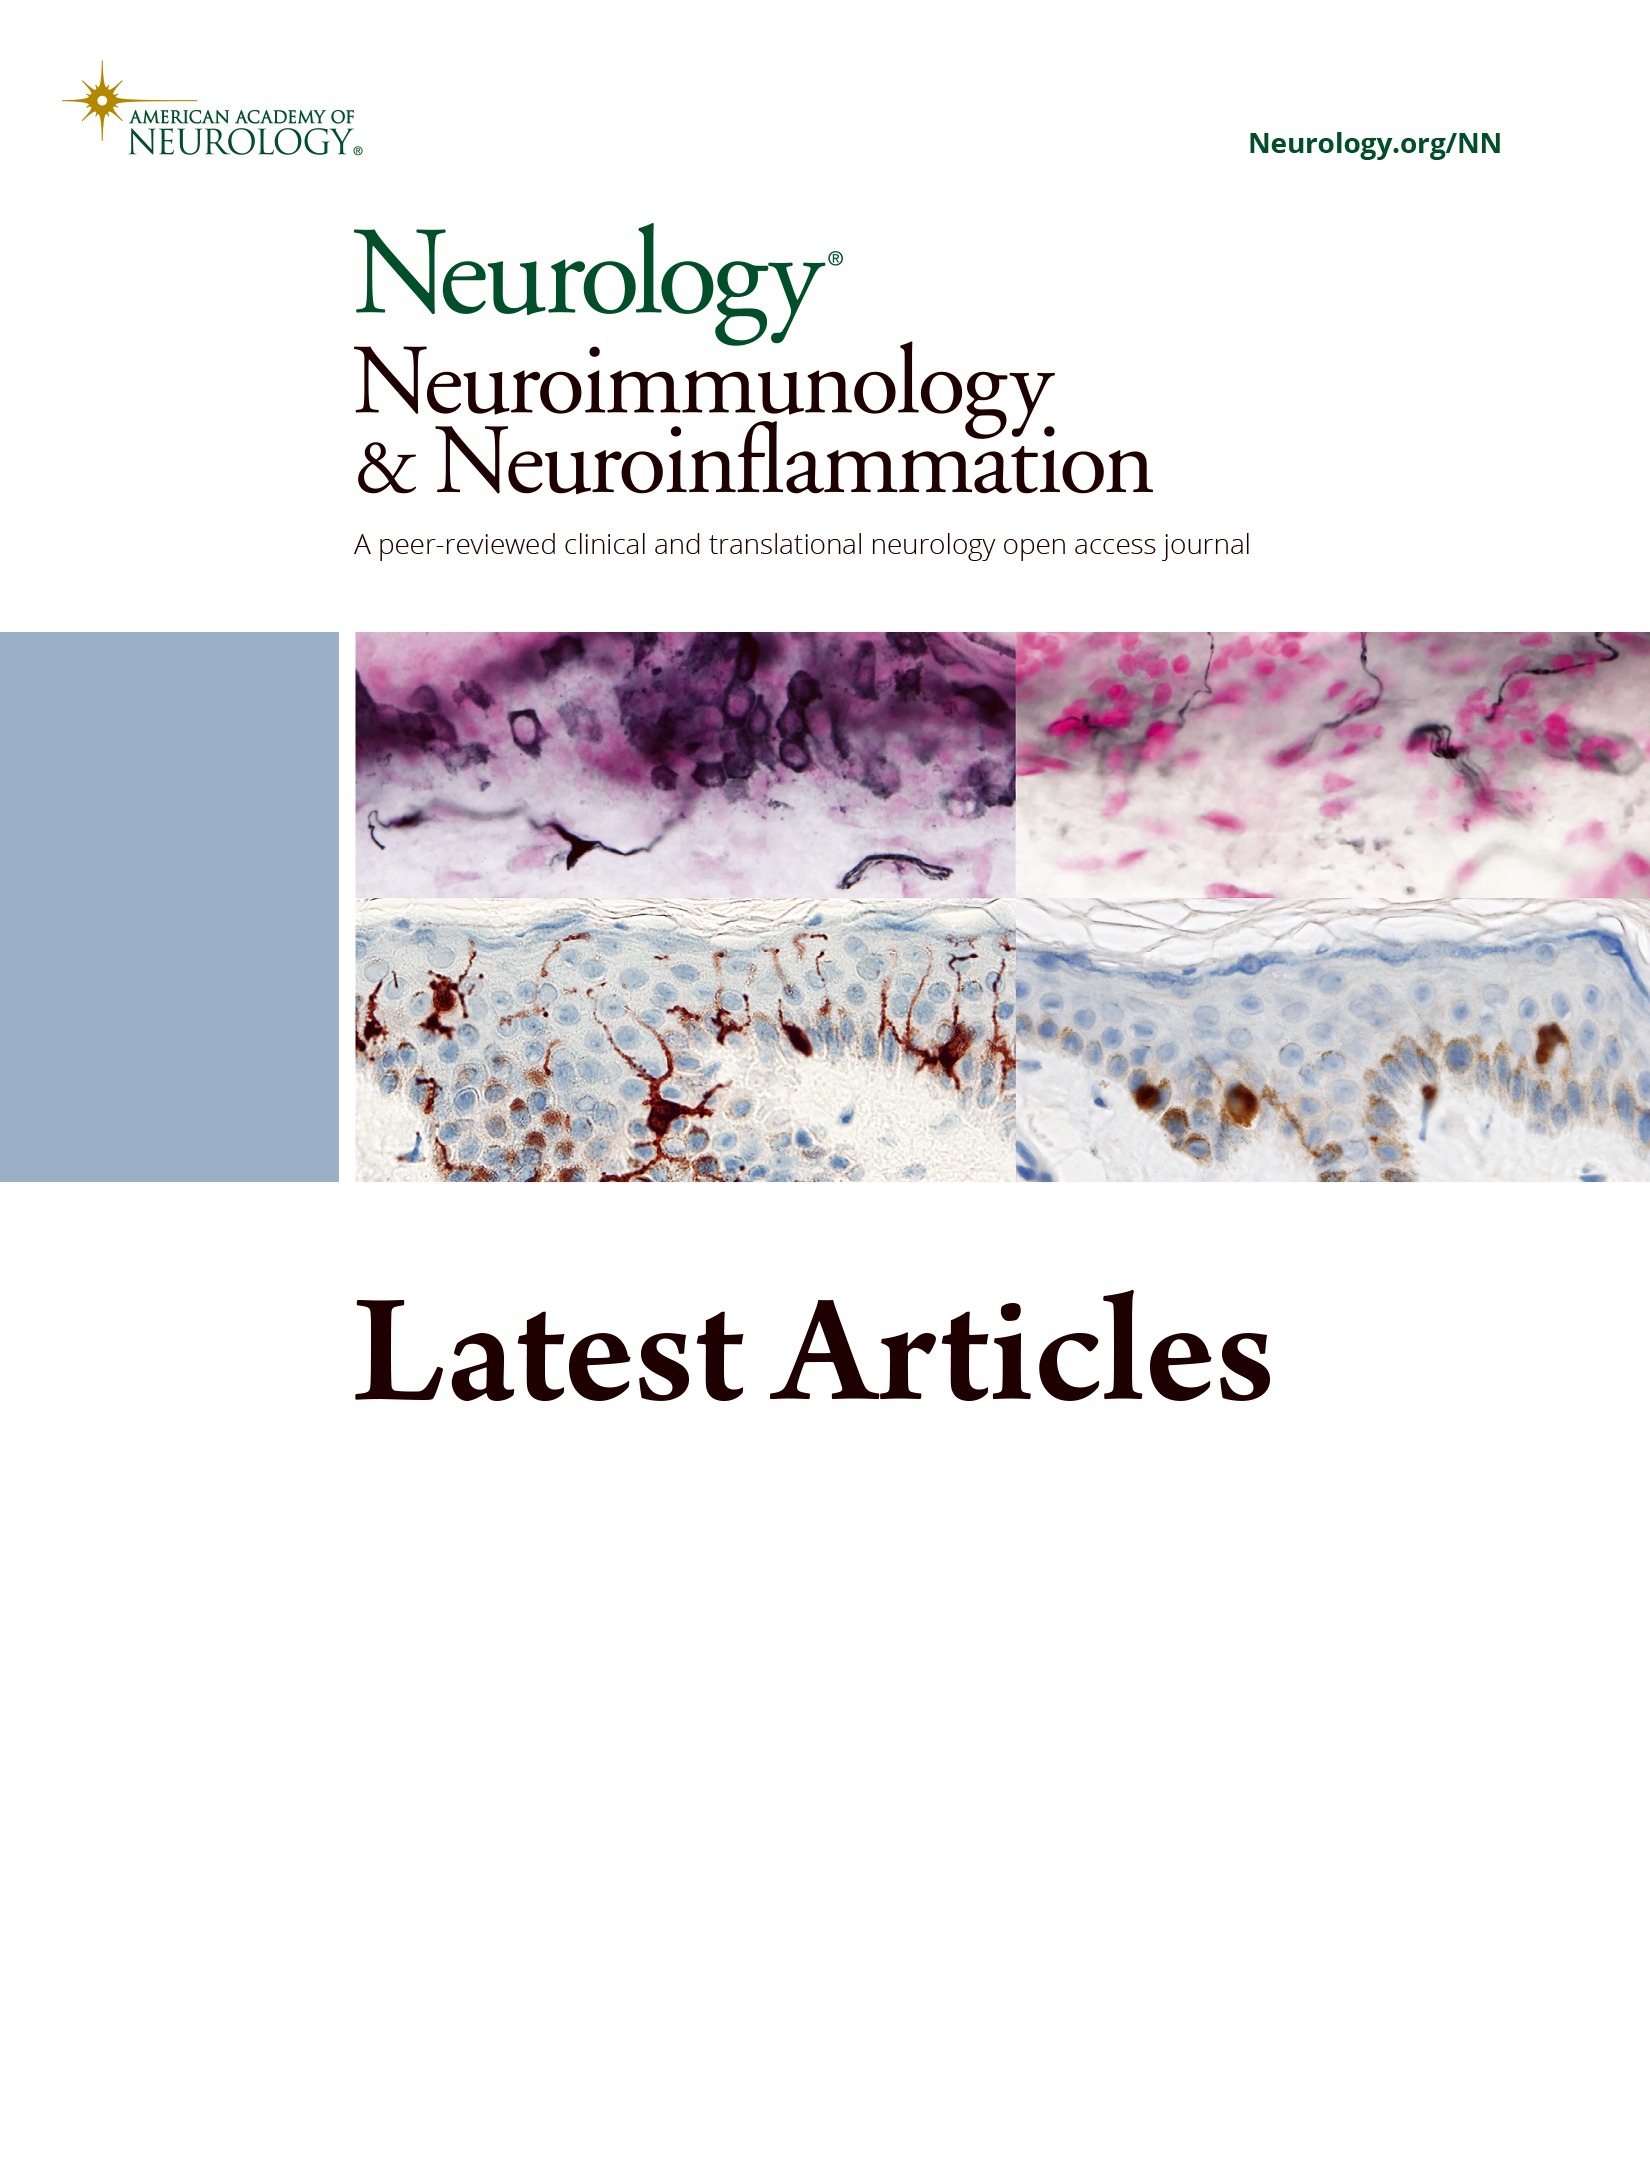 Antibody-Negative Autoimmune Encephalitis: A Single-Center Retrospective Analysis